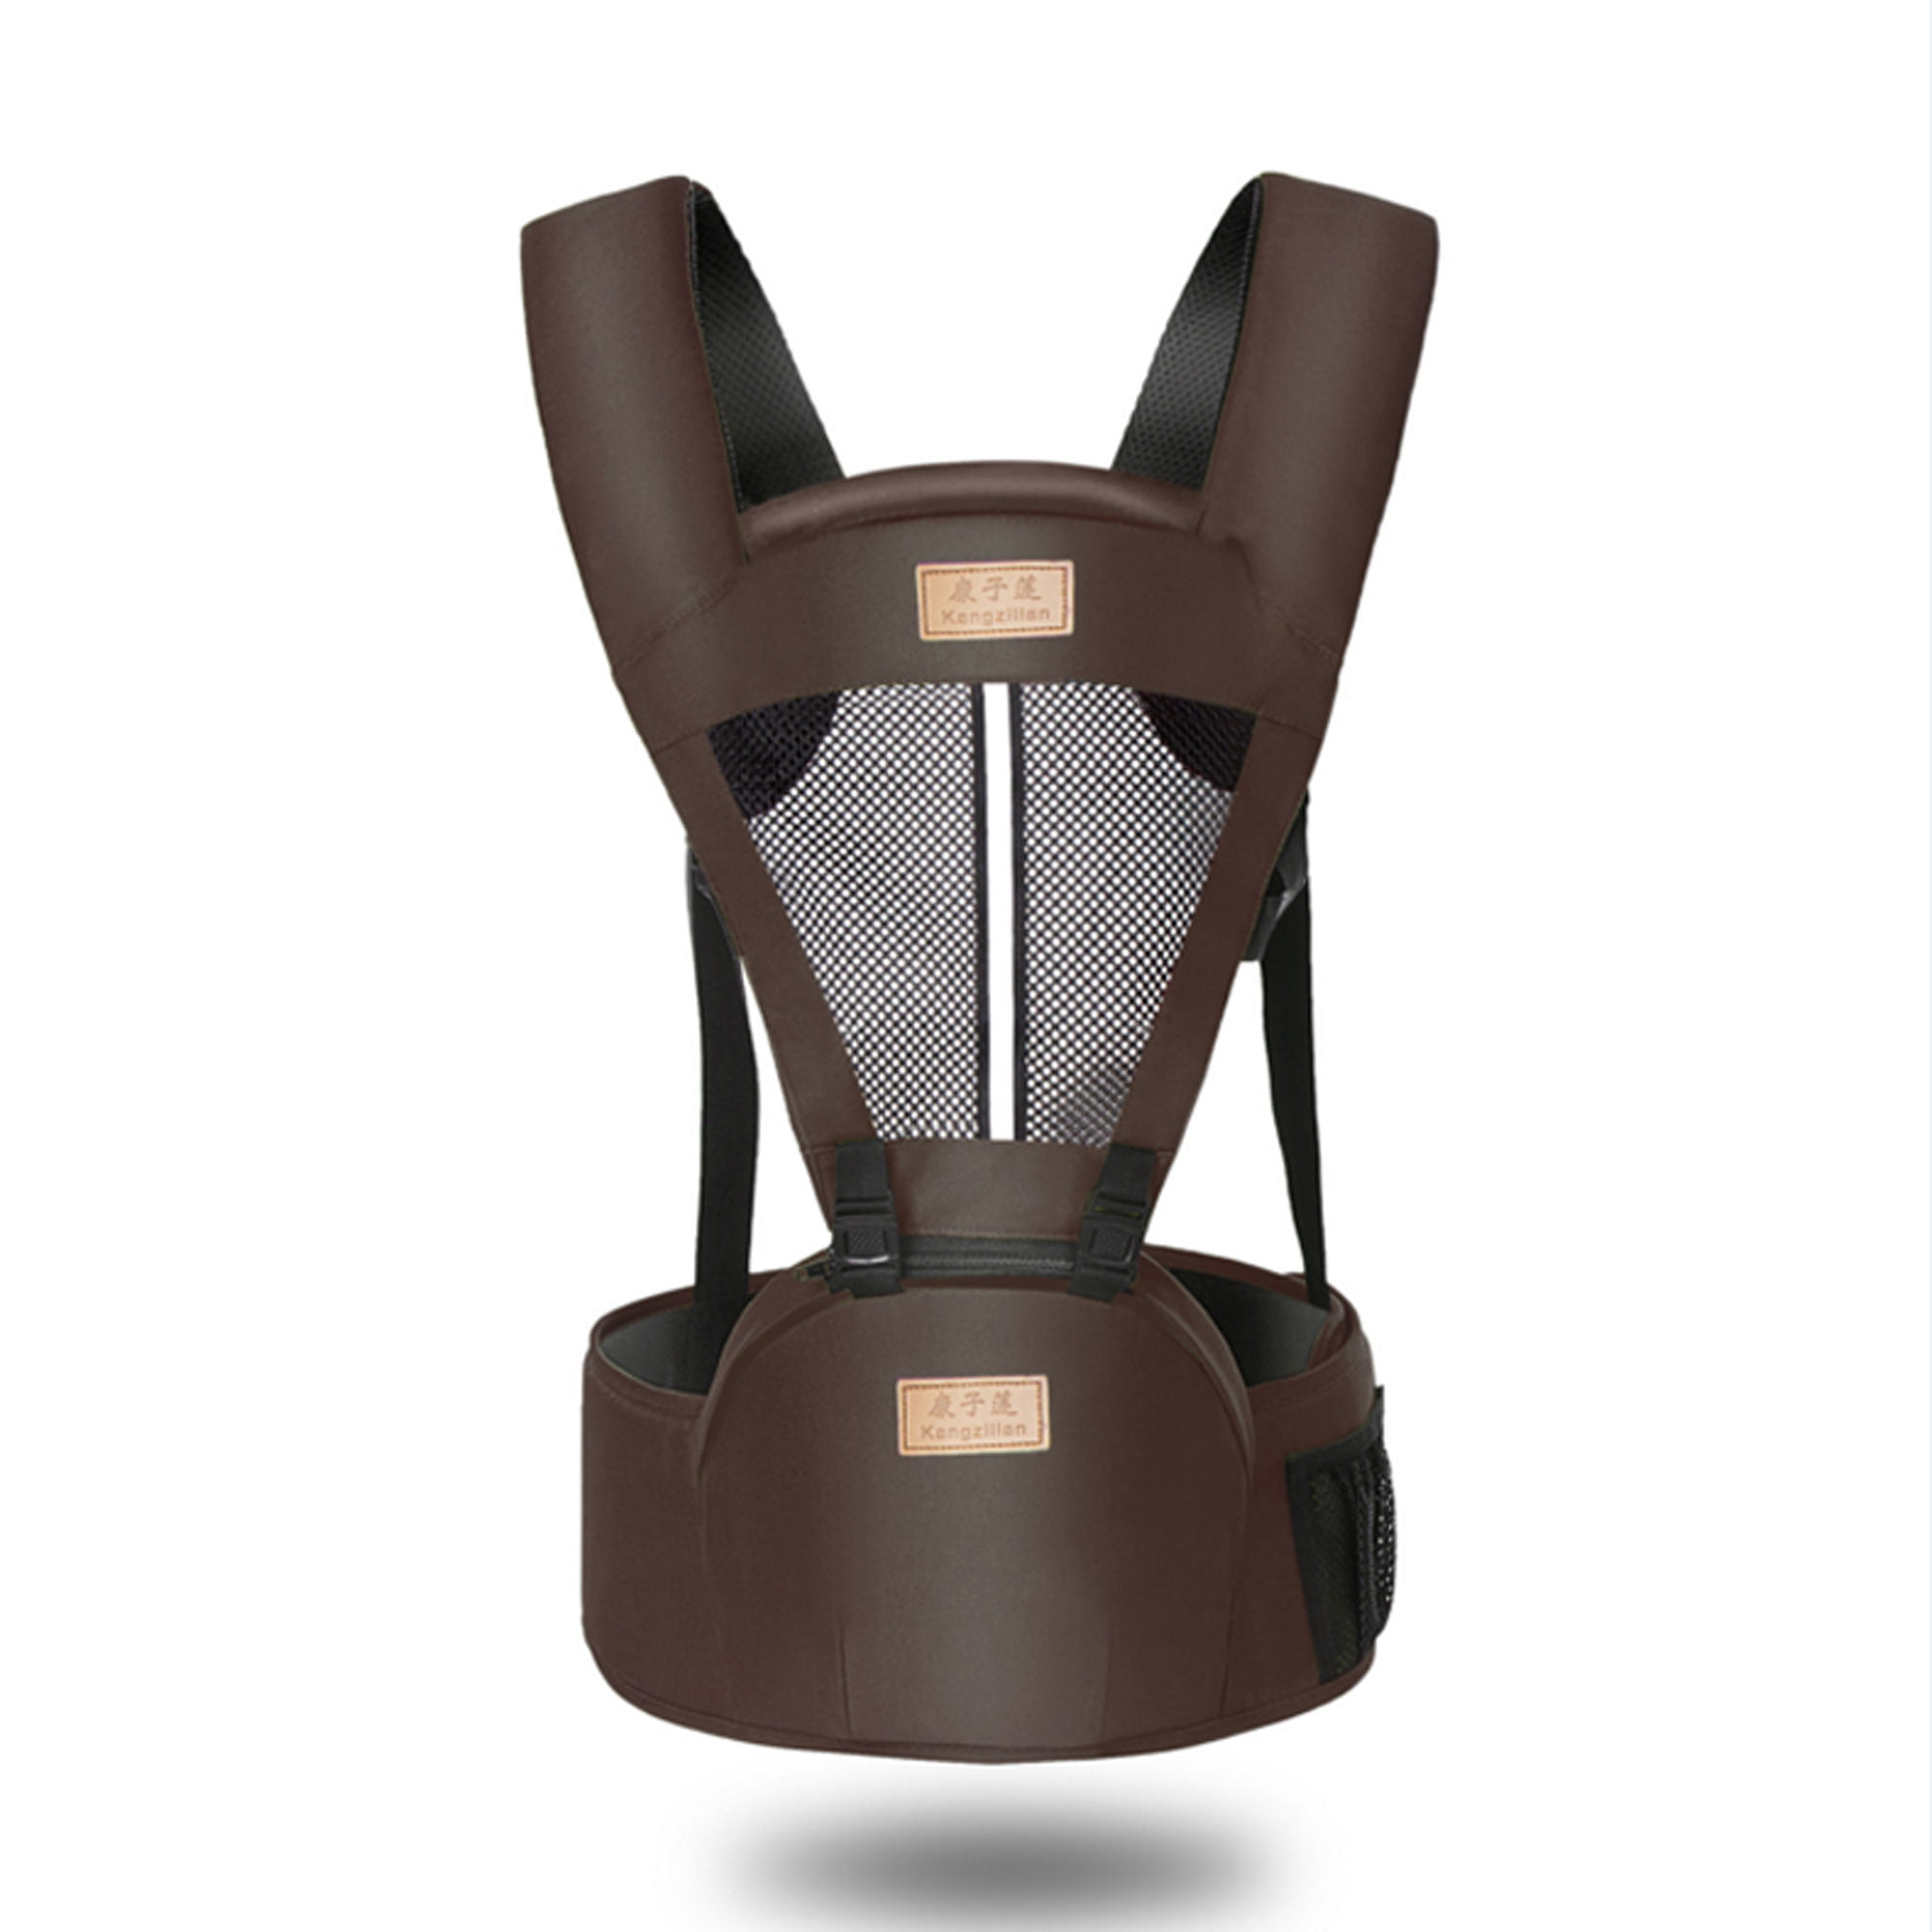 Newborn Infant Baby Carrier Breathable Ergonomic Adjustable Wrap Sling Backpack 